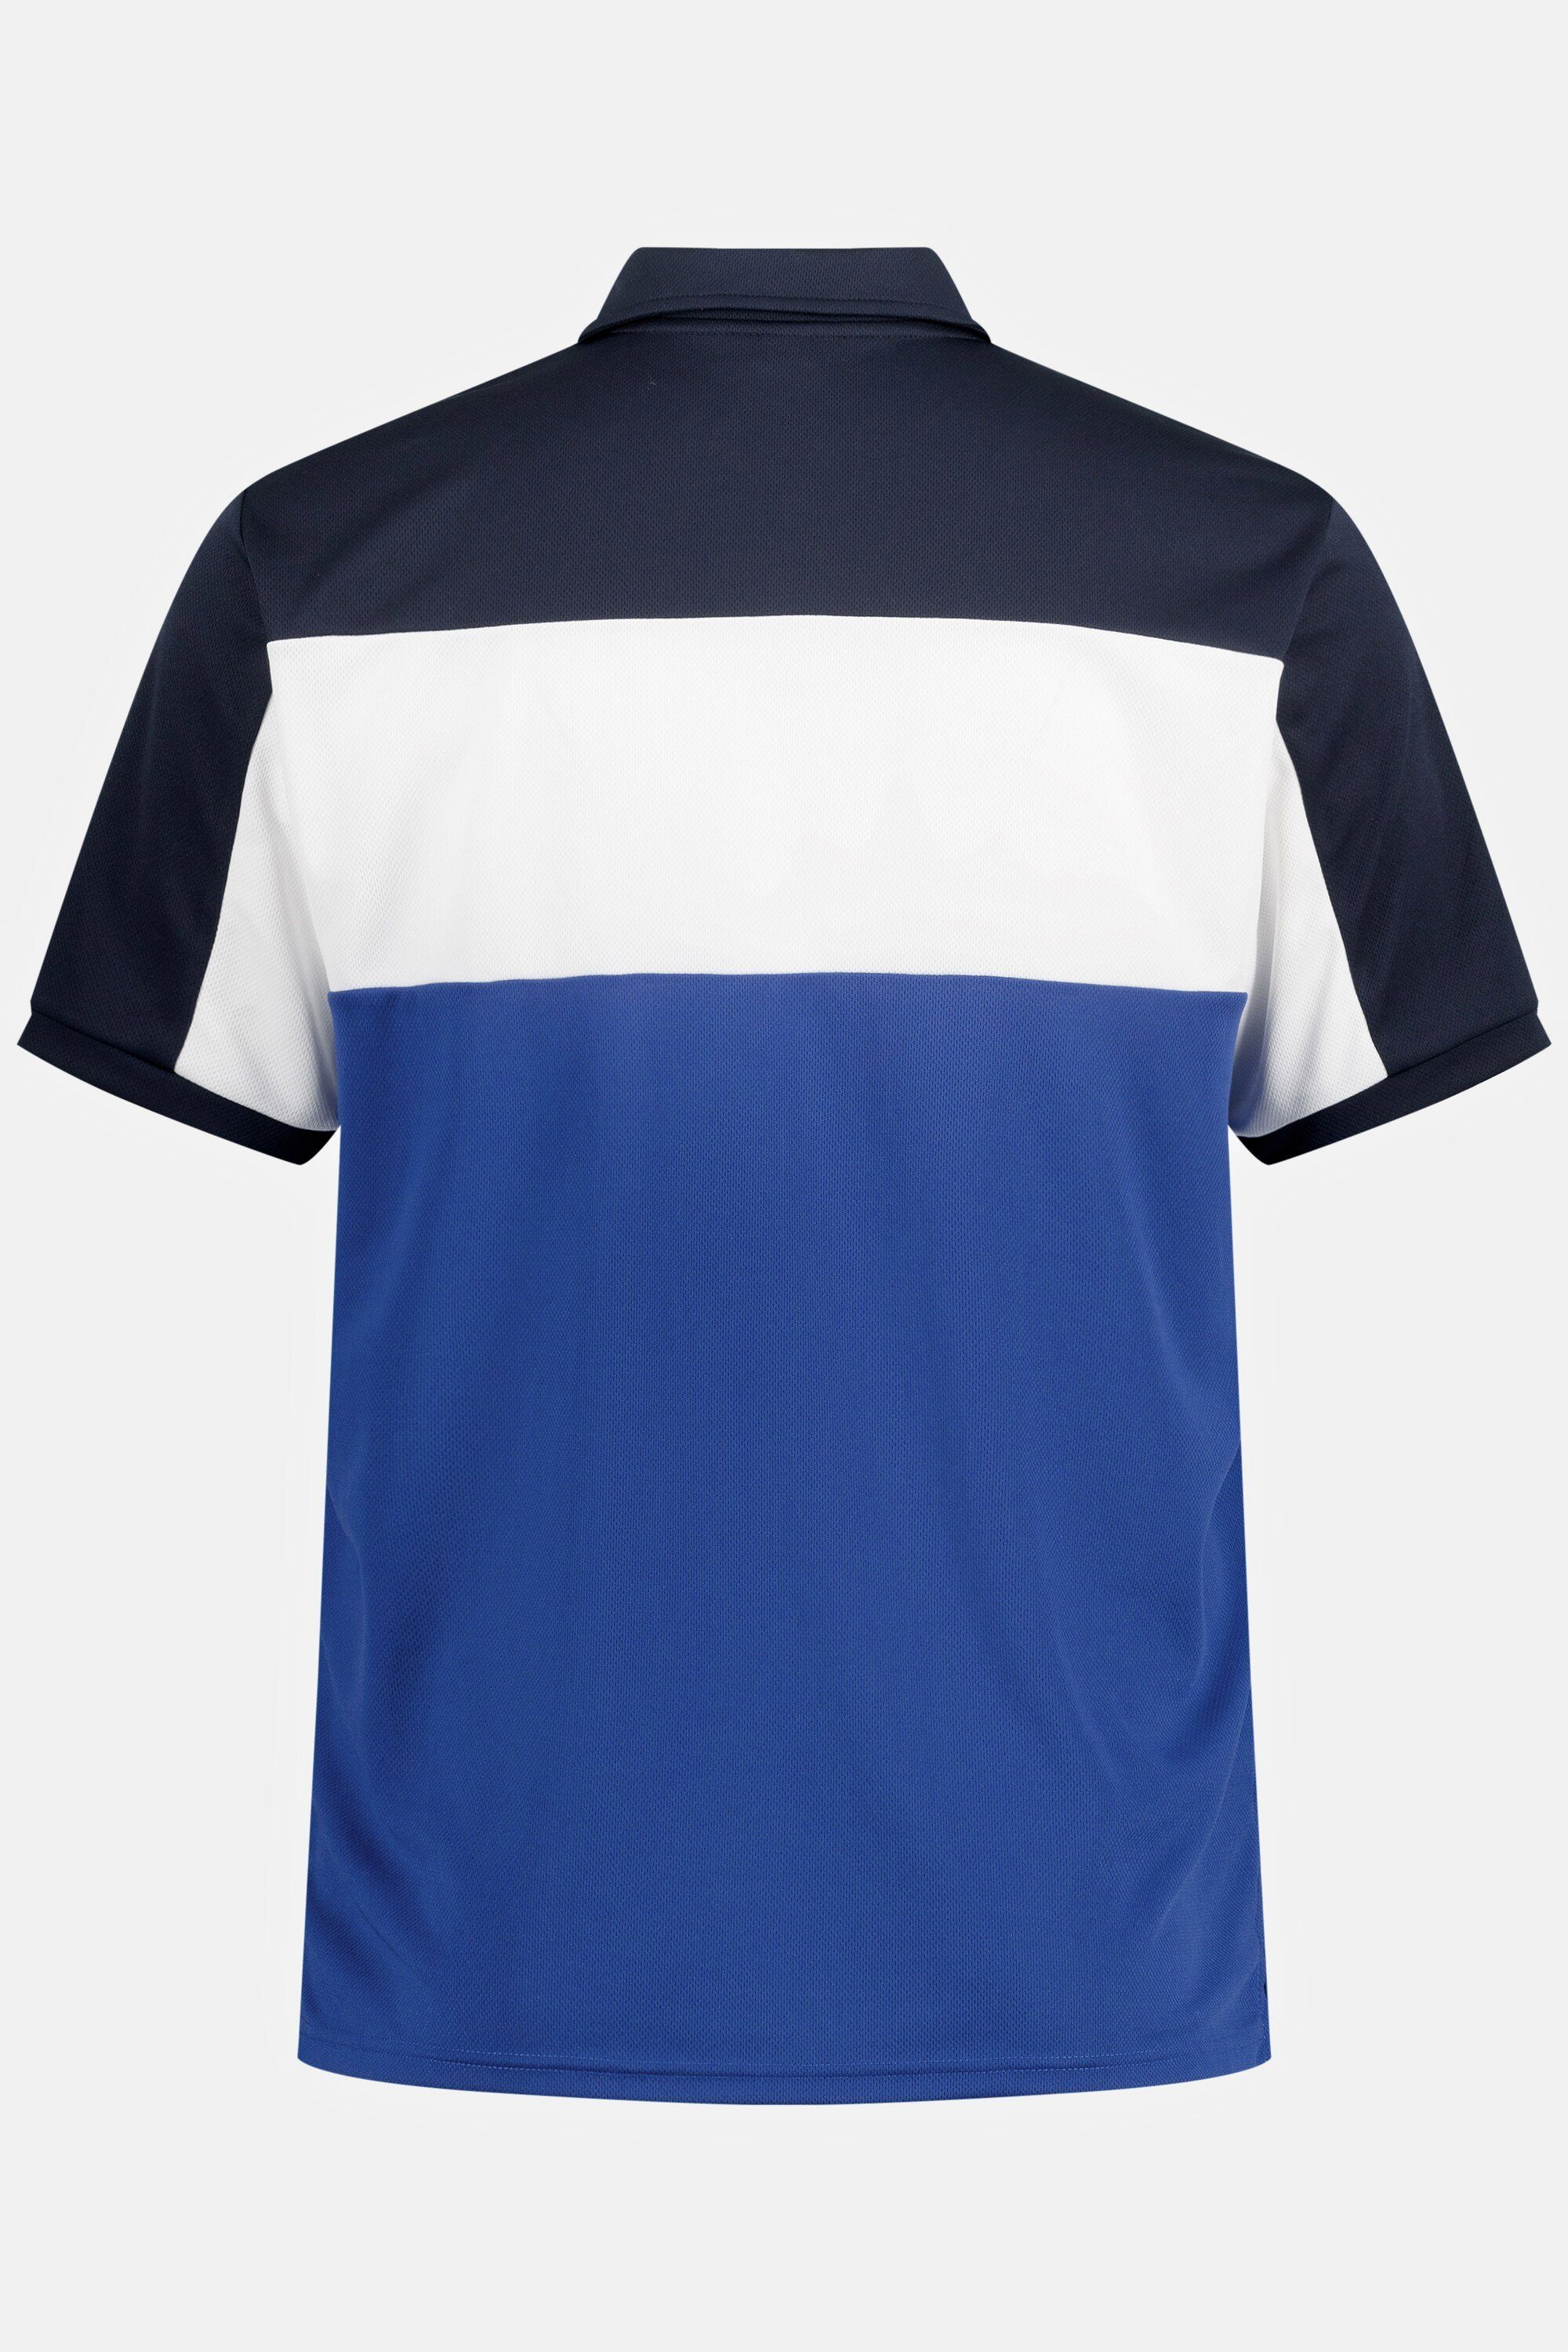 JP1880 Halbarm Poloshirt Tennis QuickDry Poloshirt